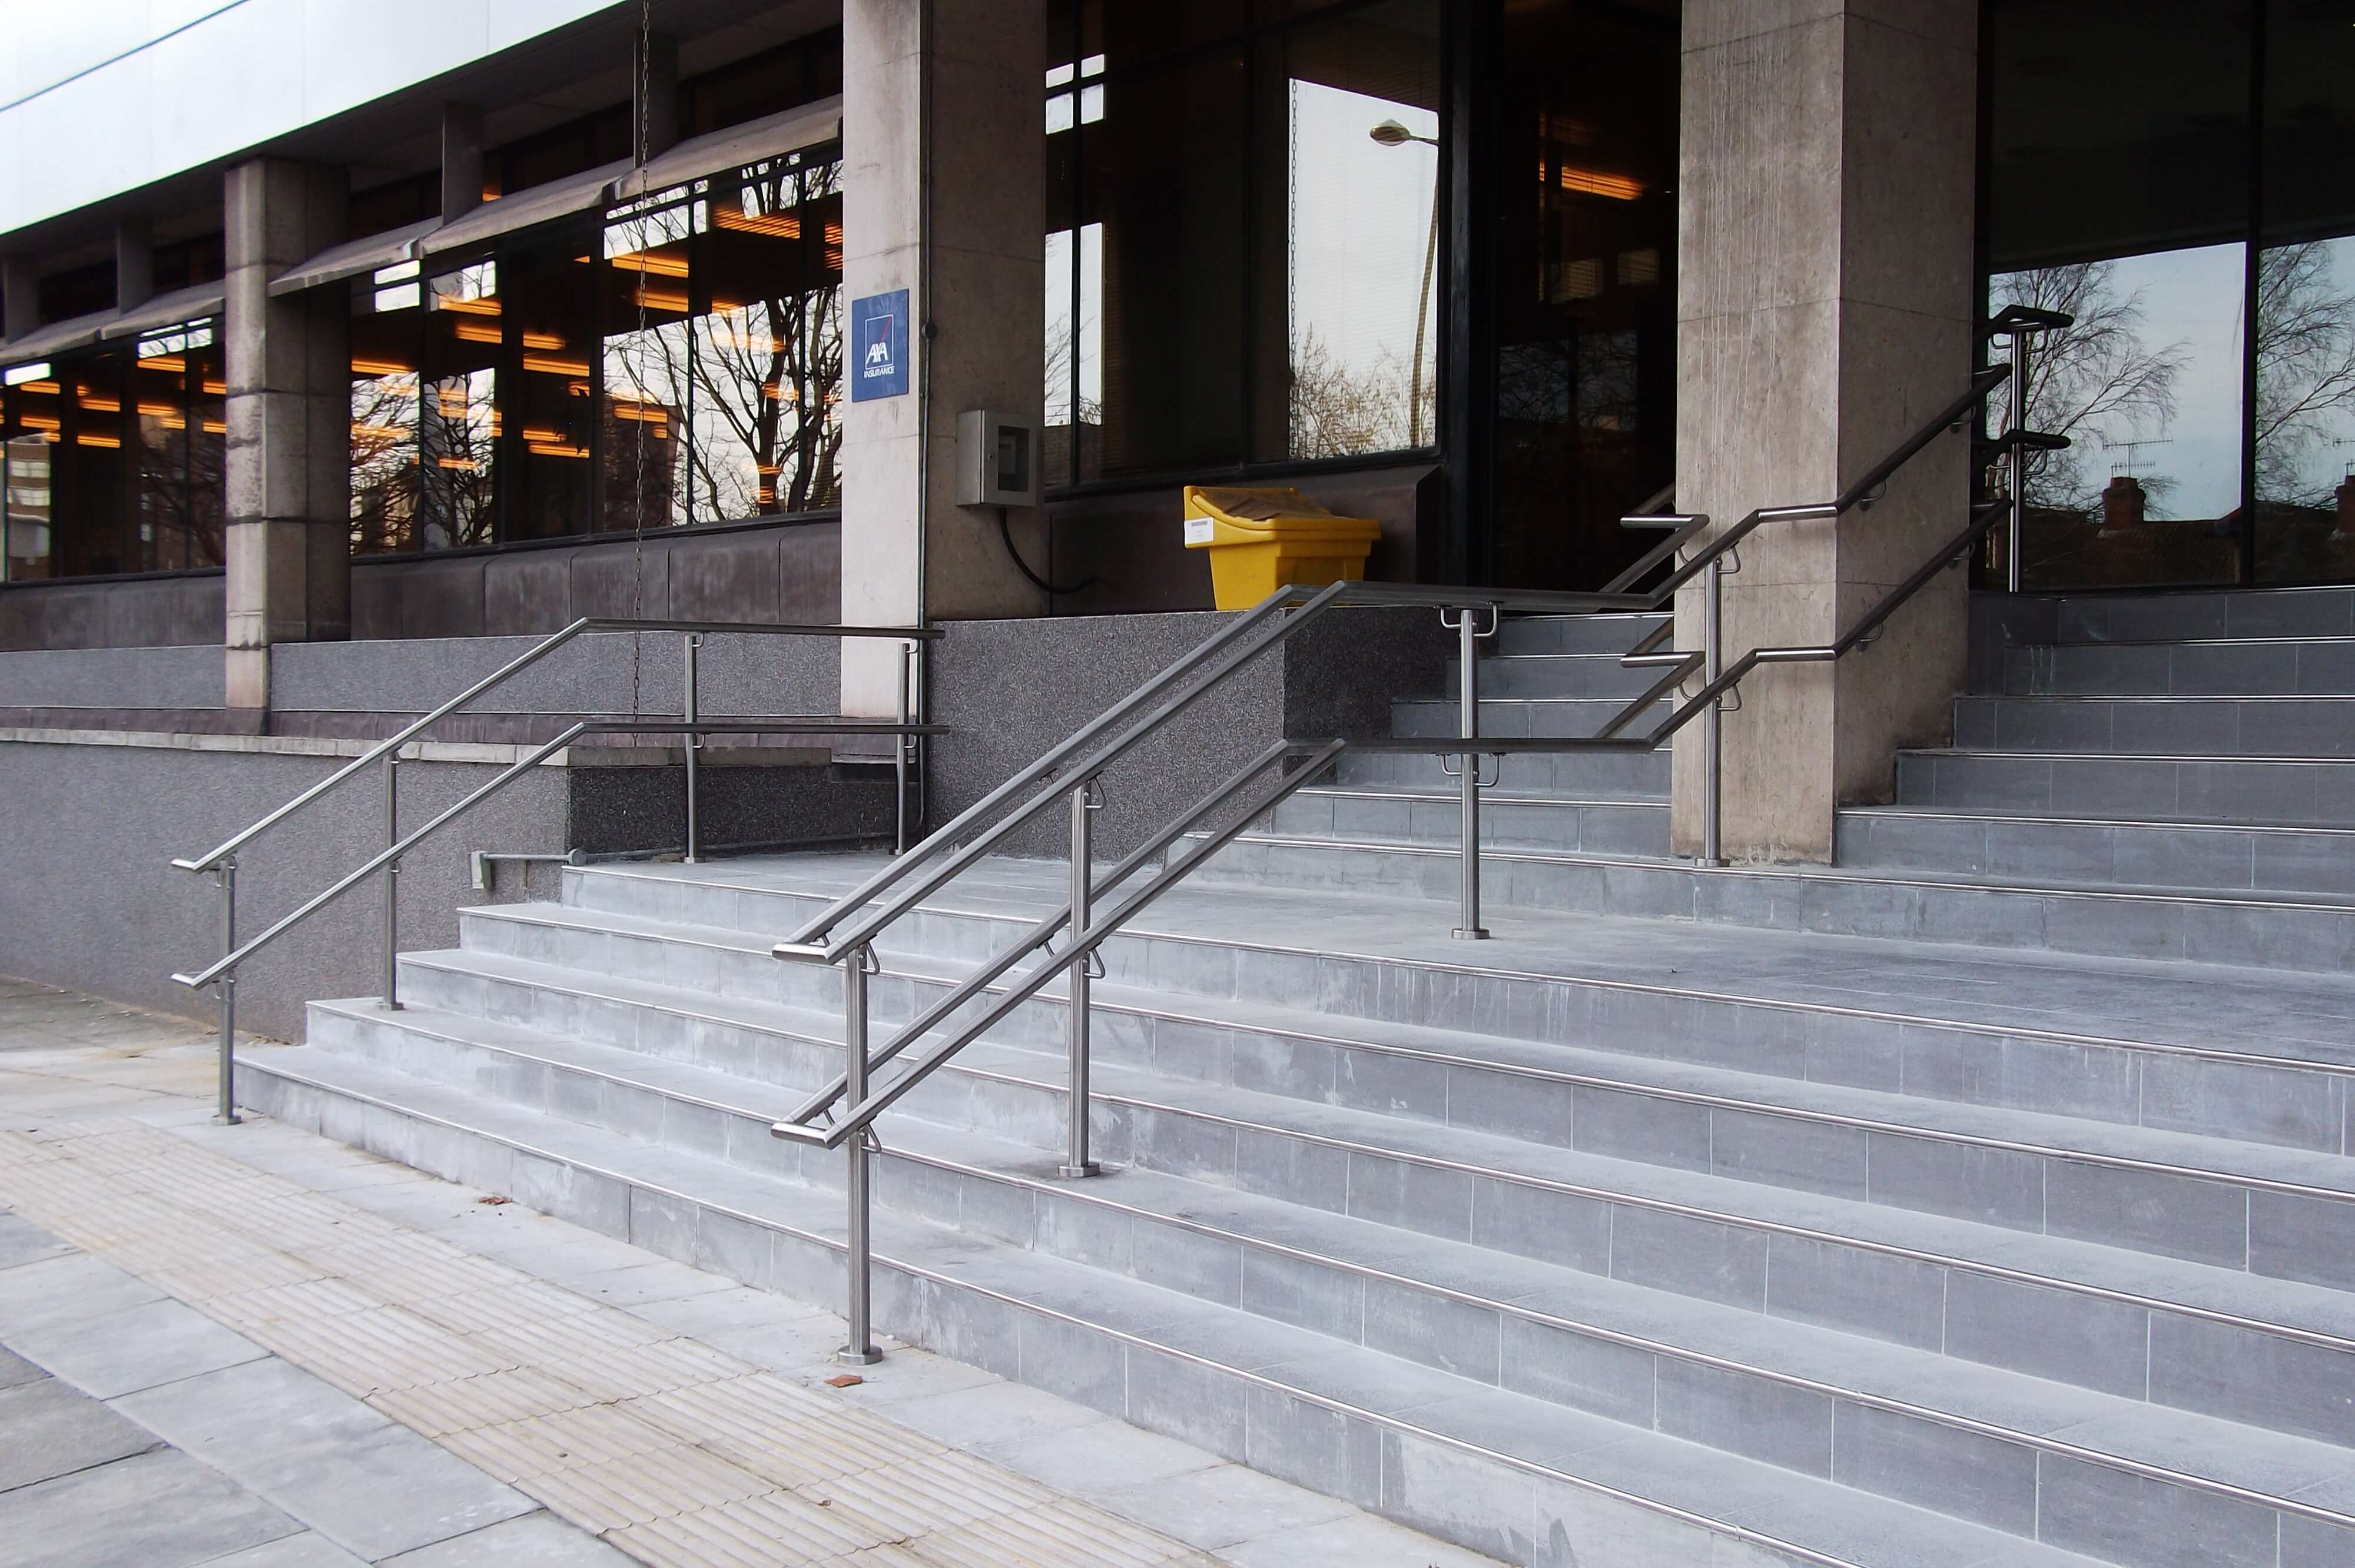 stainless steel handrail on steps